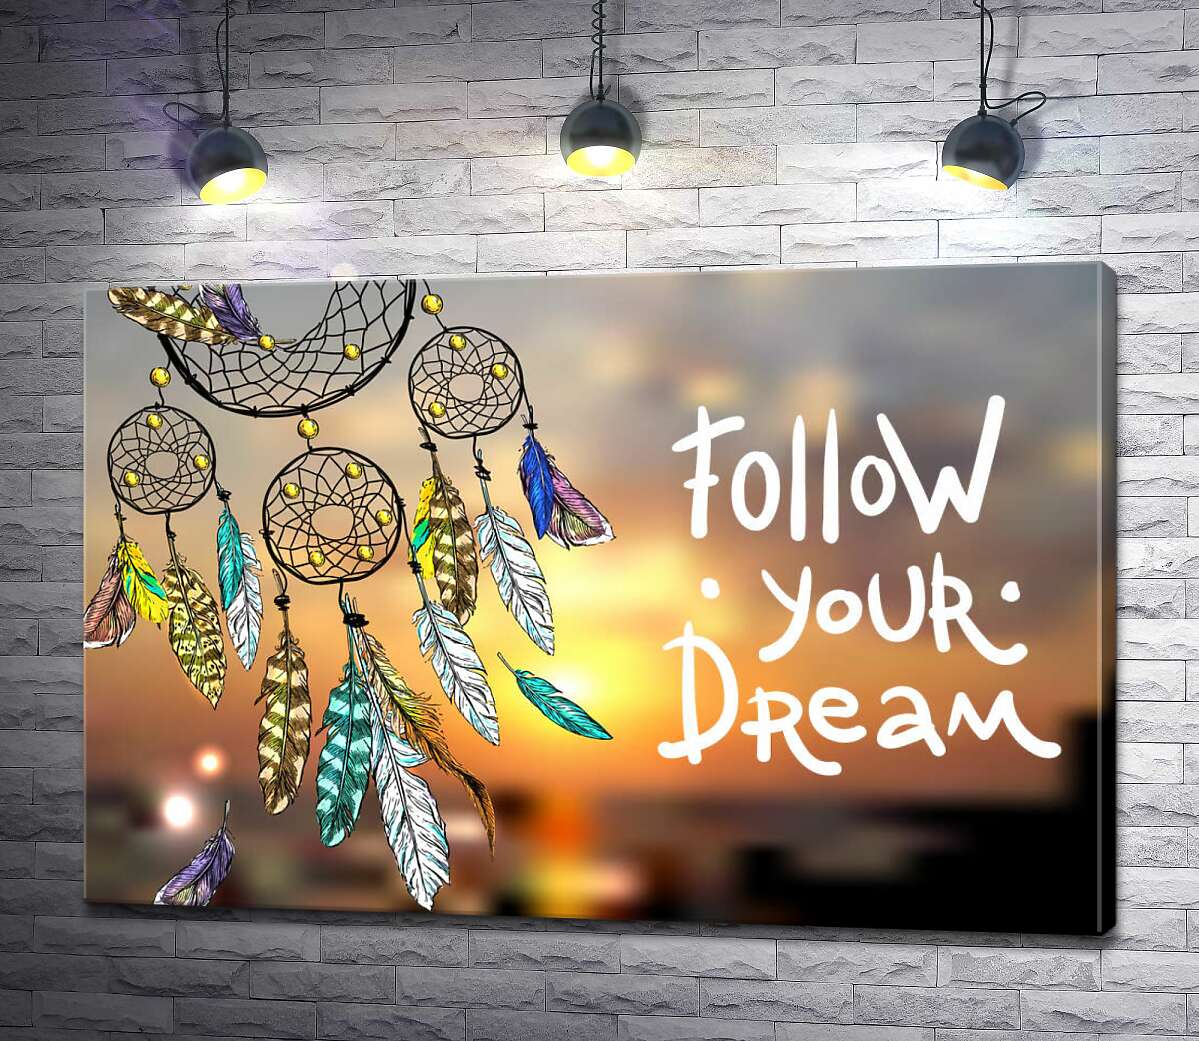 картина Индейский ловец снов рядом с фразой "follow your dream"